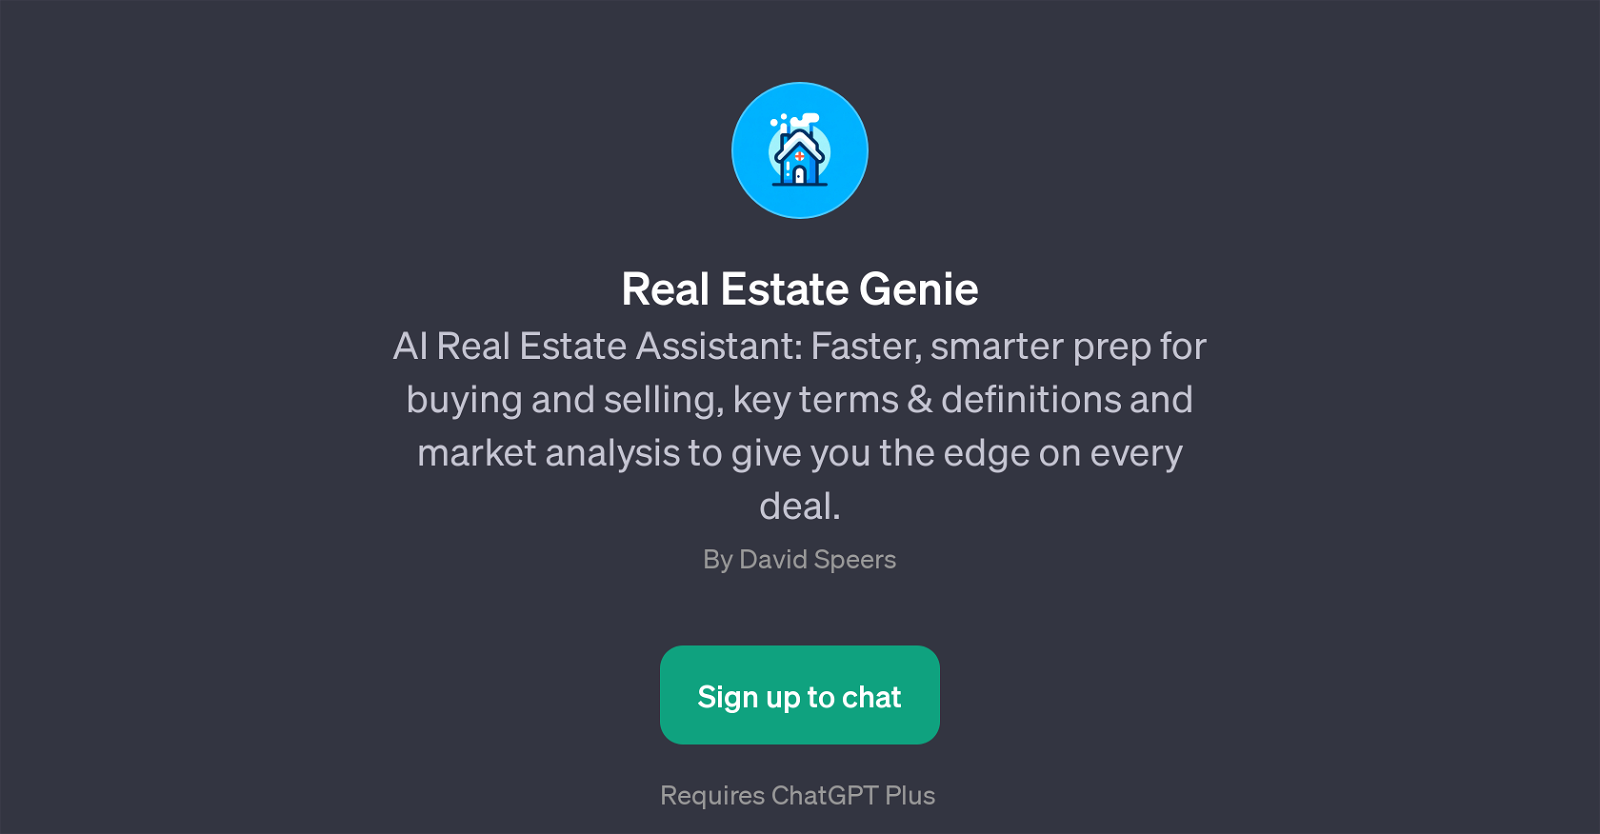 Real Estate Genie website